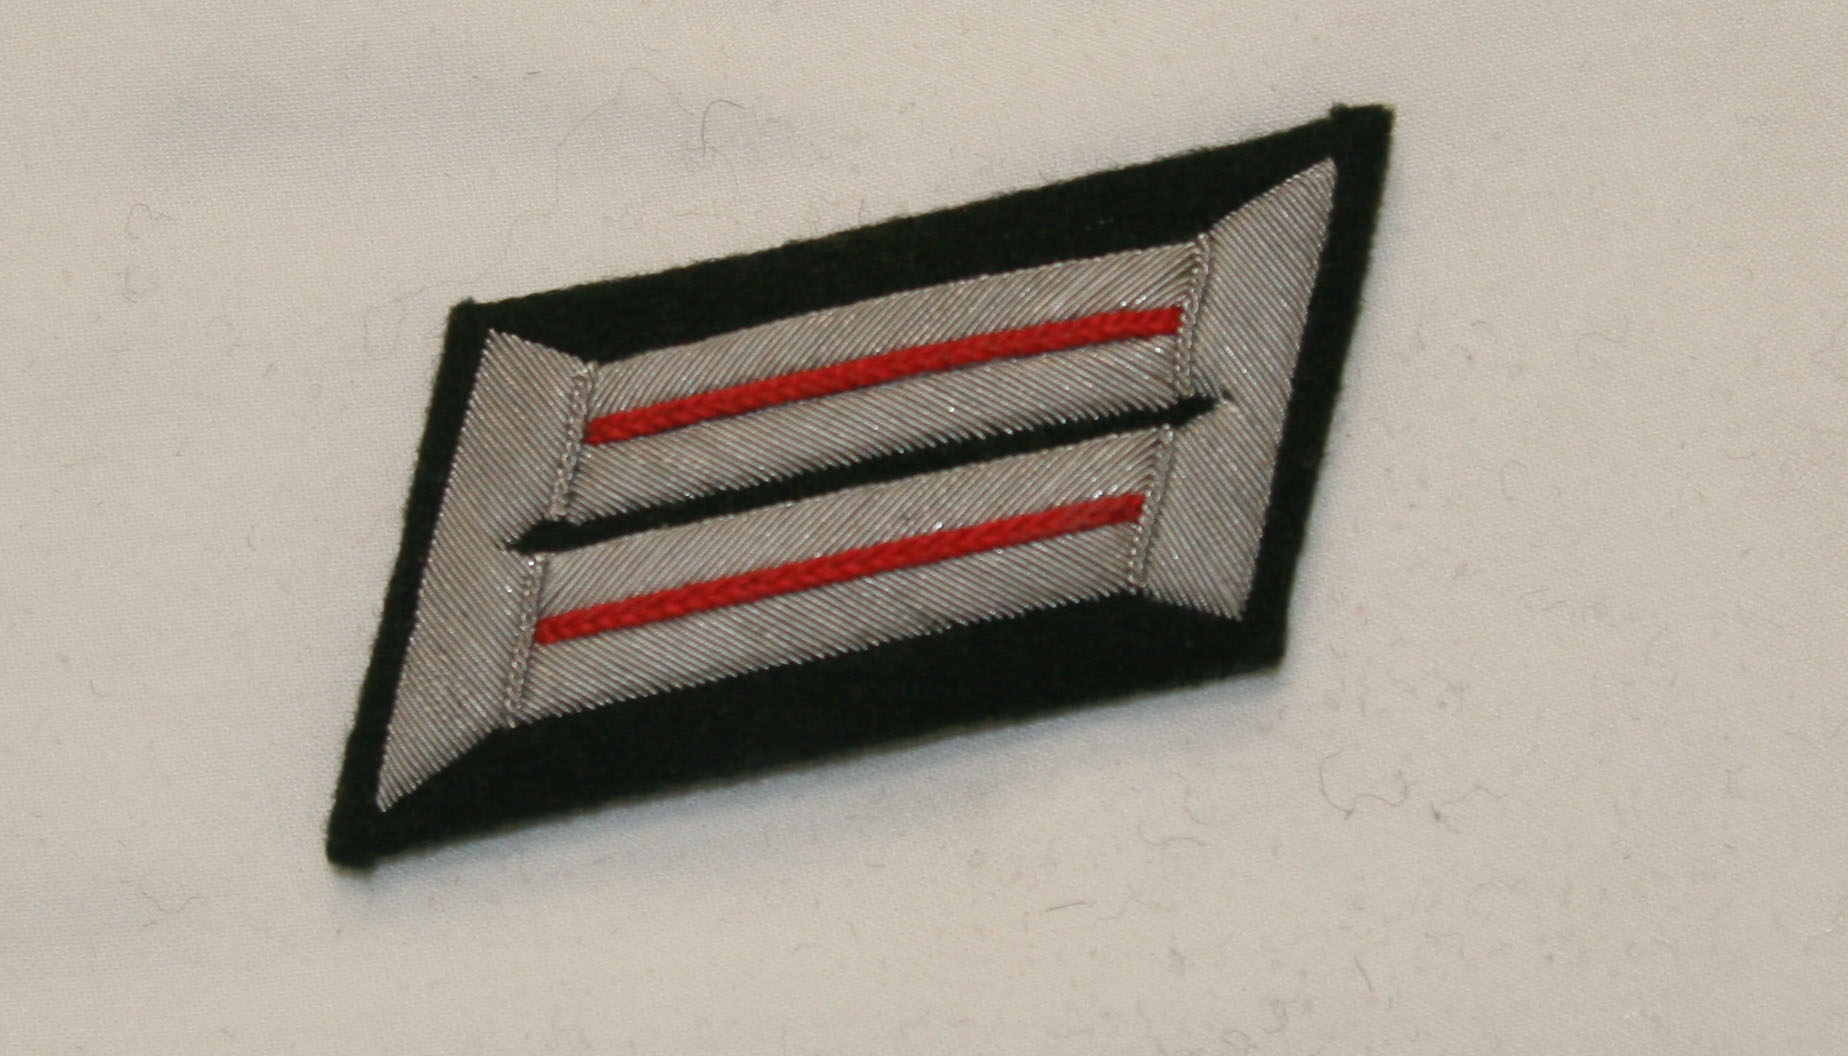 Heer Officer Collar tabs (Kragenspiegal), Red/Artillery